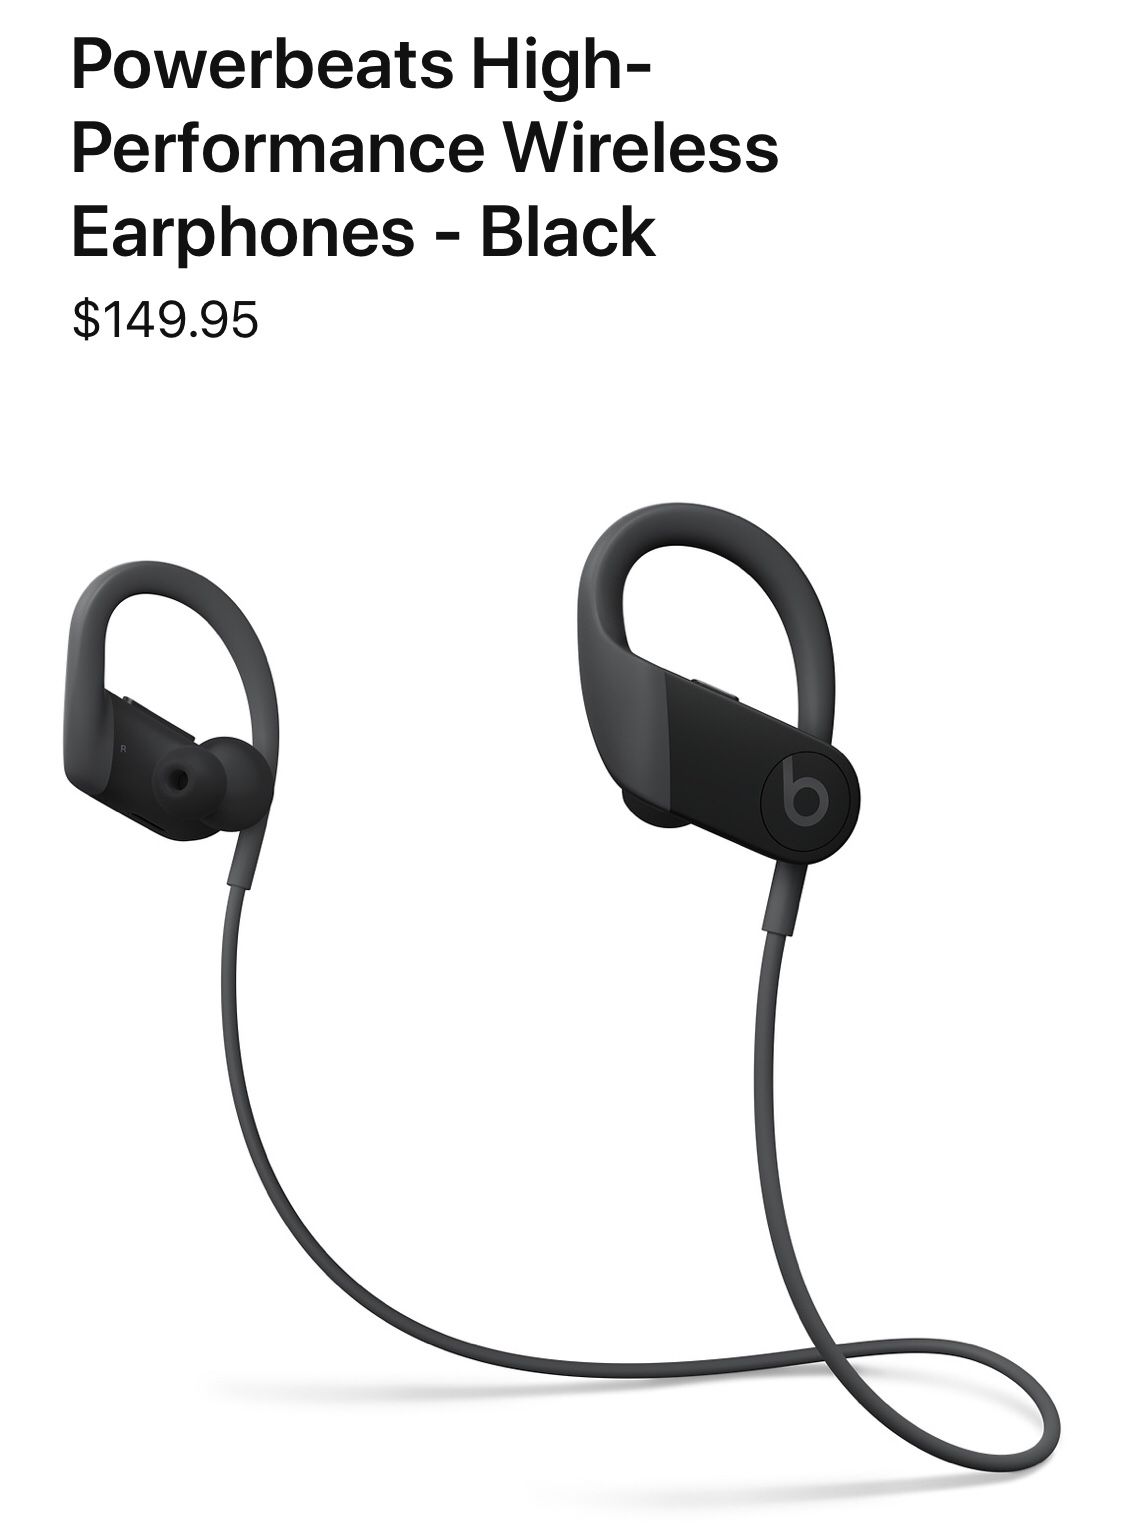 Powerbeats high performance wireless earphones - black